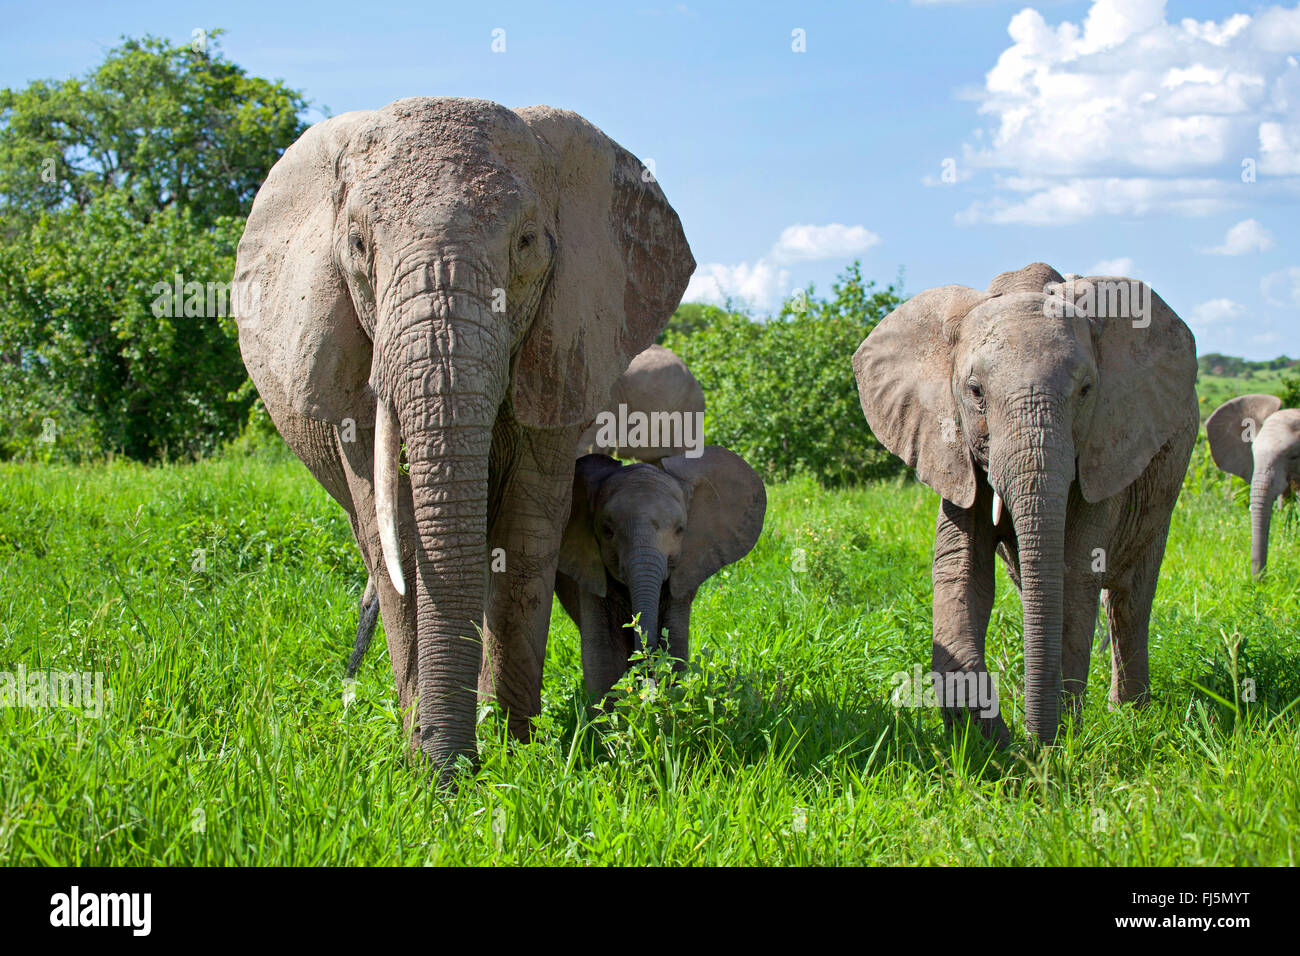 African elephant (Loxodonta africana), cow elephant with calves on grass, Kenya Stock Photo